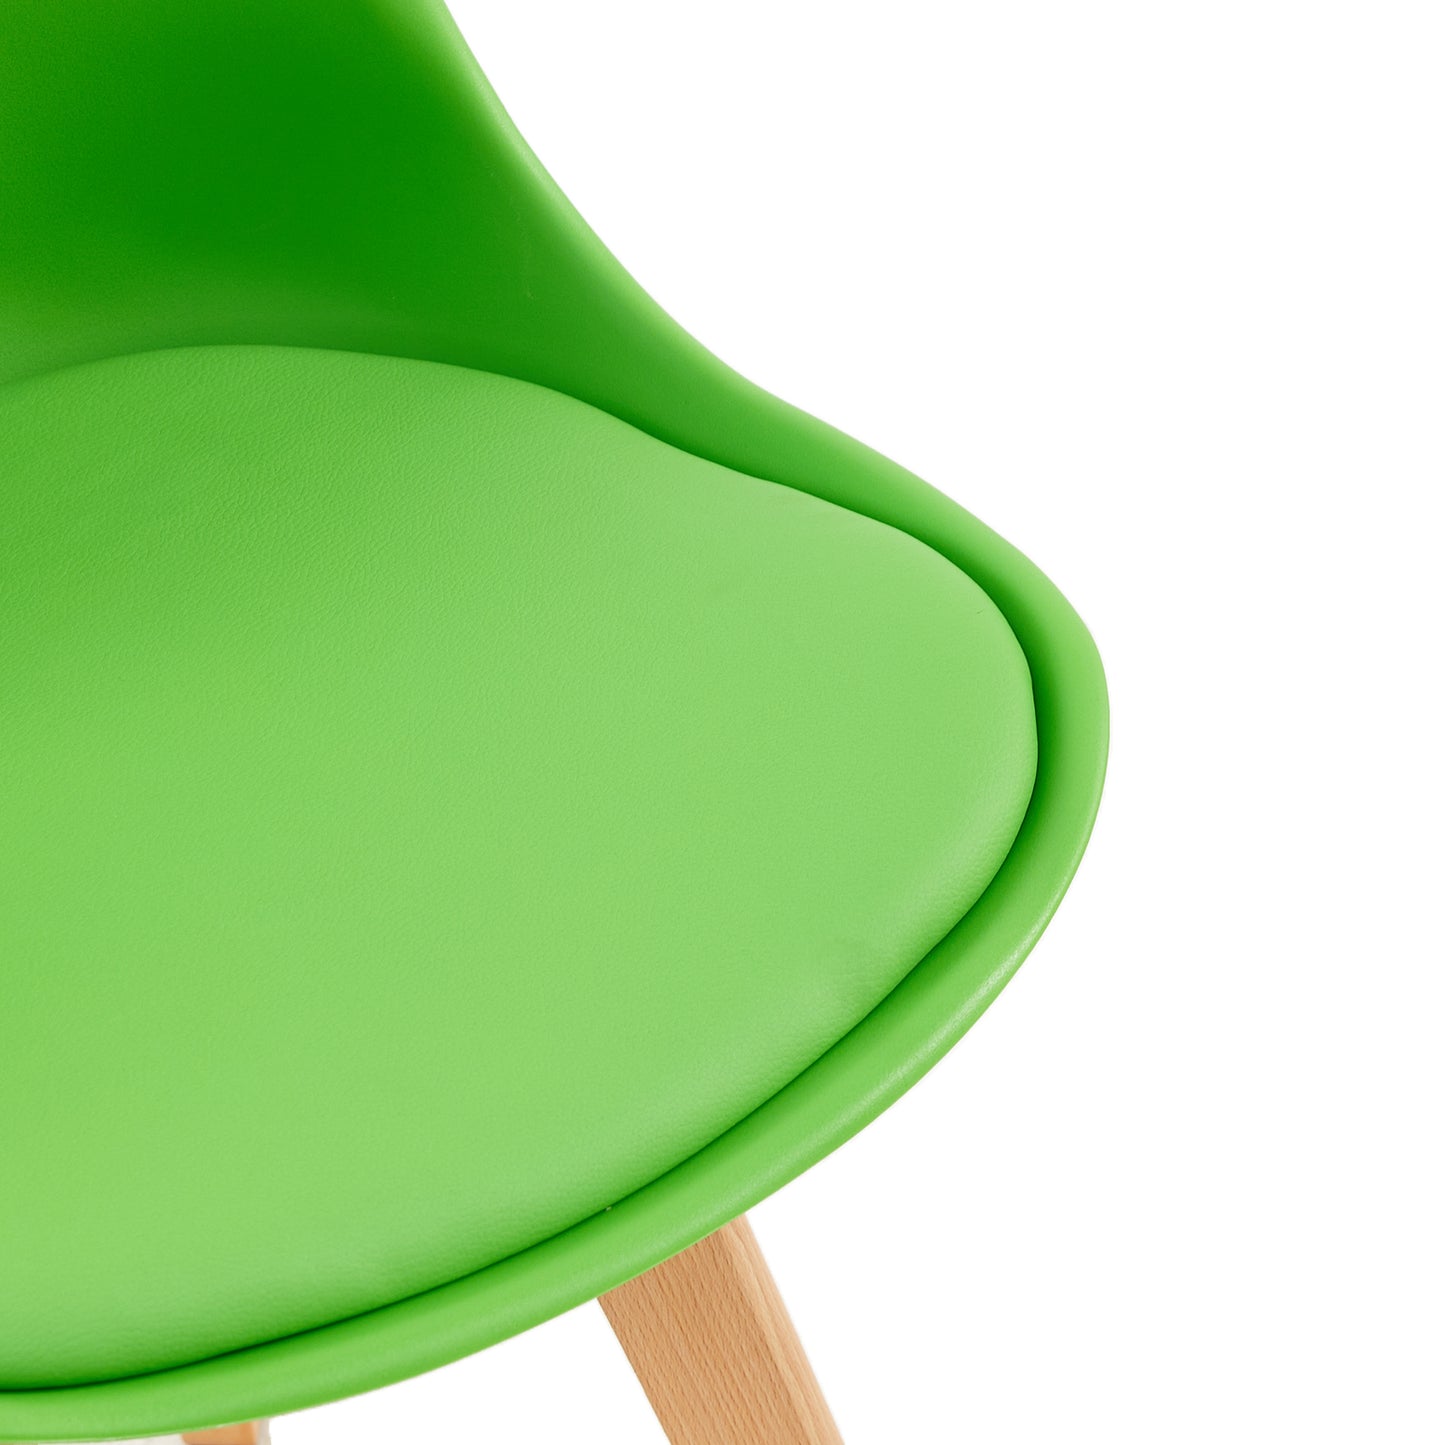 1× chaise de salle à manger design contemporain scandinave-Vert